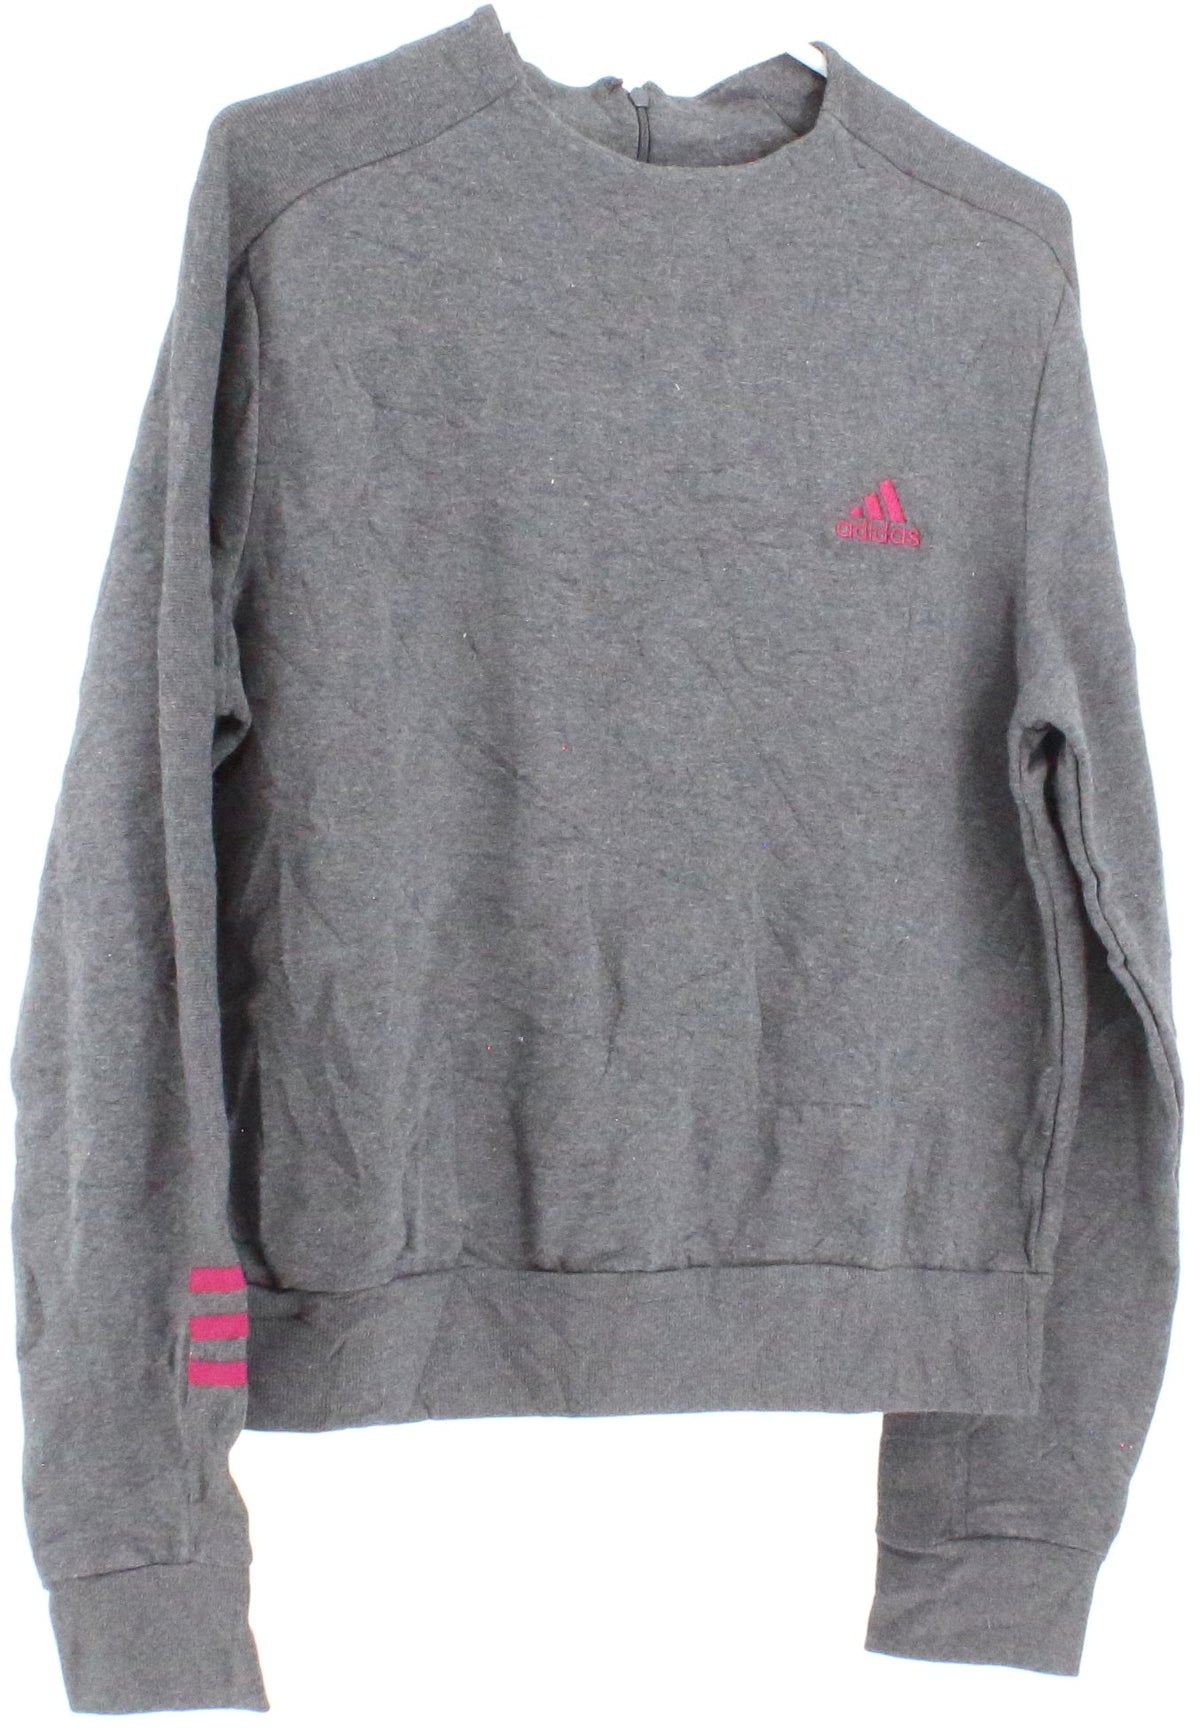 Adidas Dark Grey Sweatshirt With Magenta Small Stripes On Sleeves